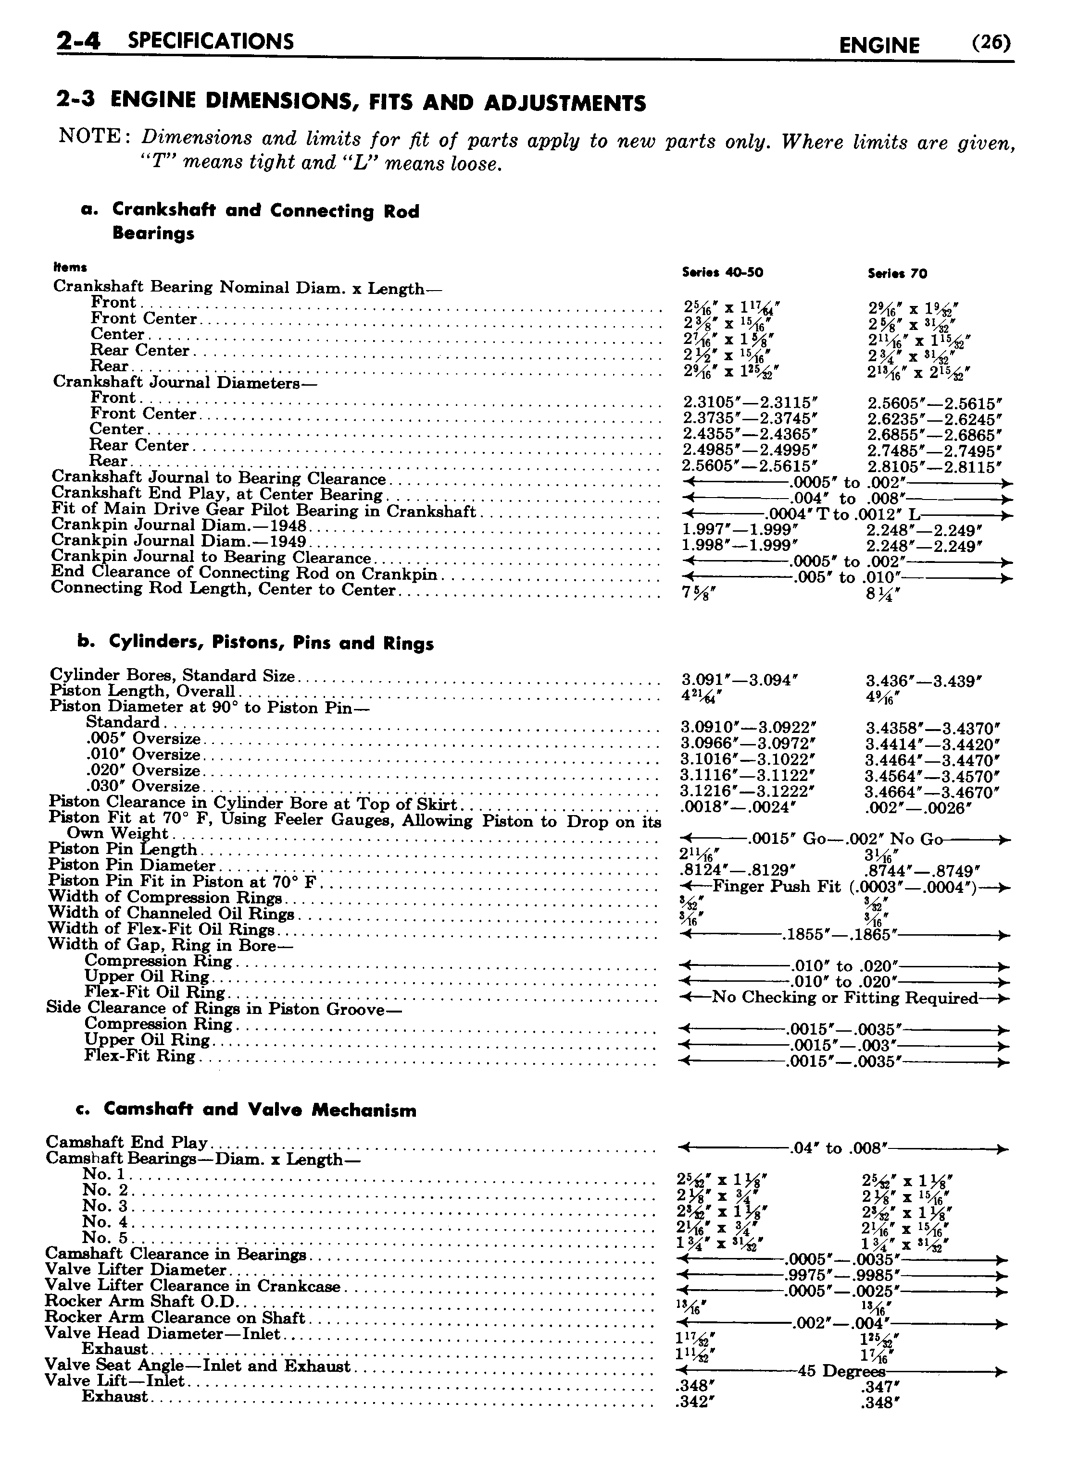 n_03 1948 Buick Shop Manual - Engine-004-004.jpg